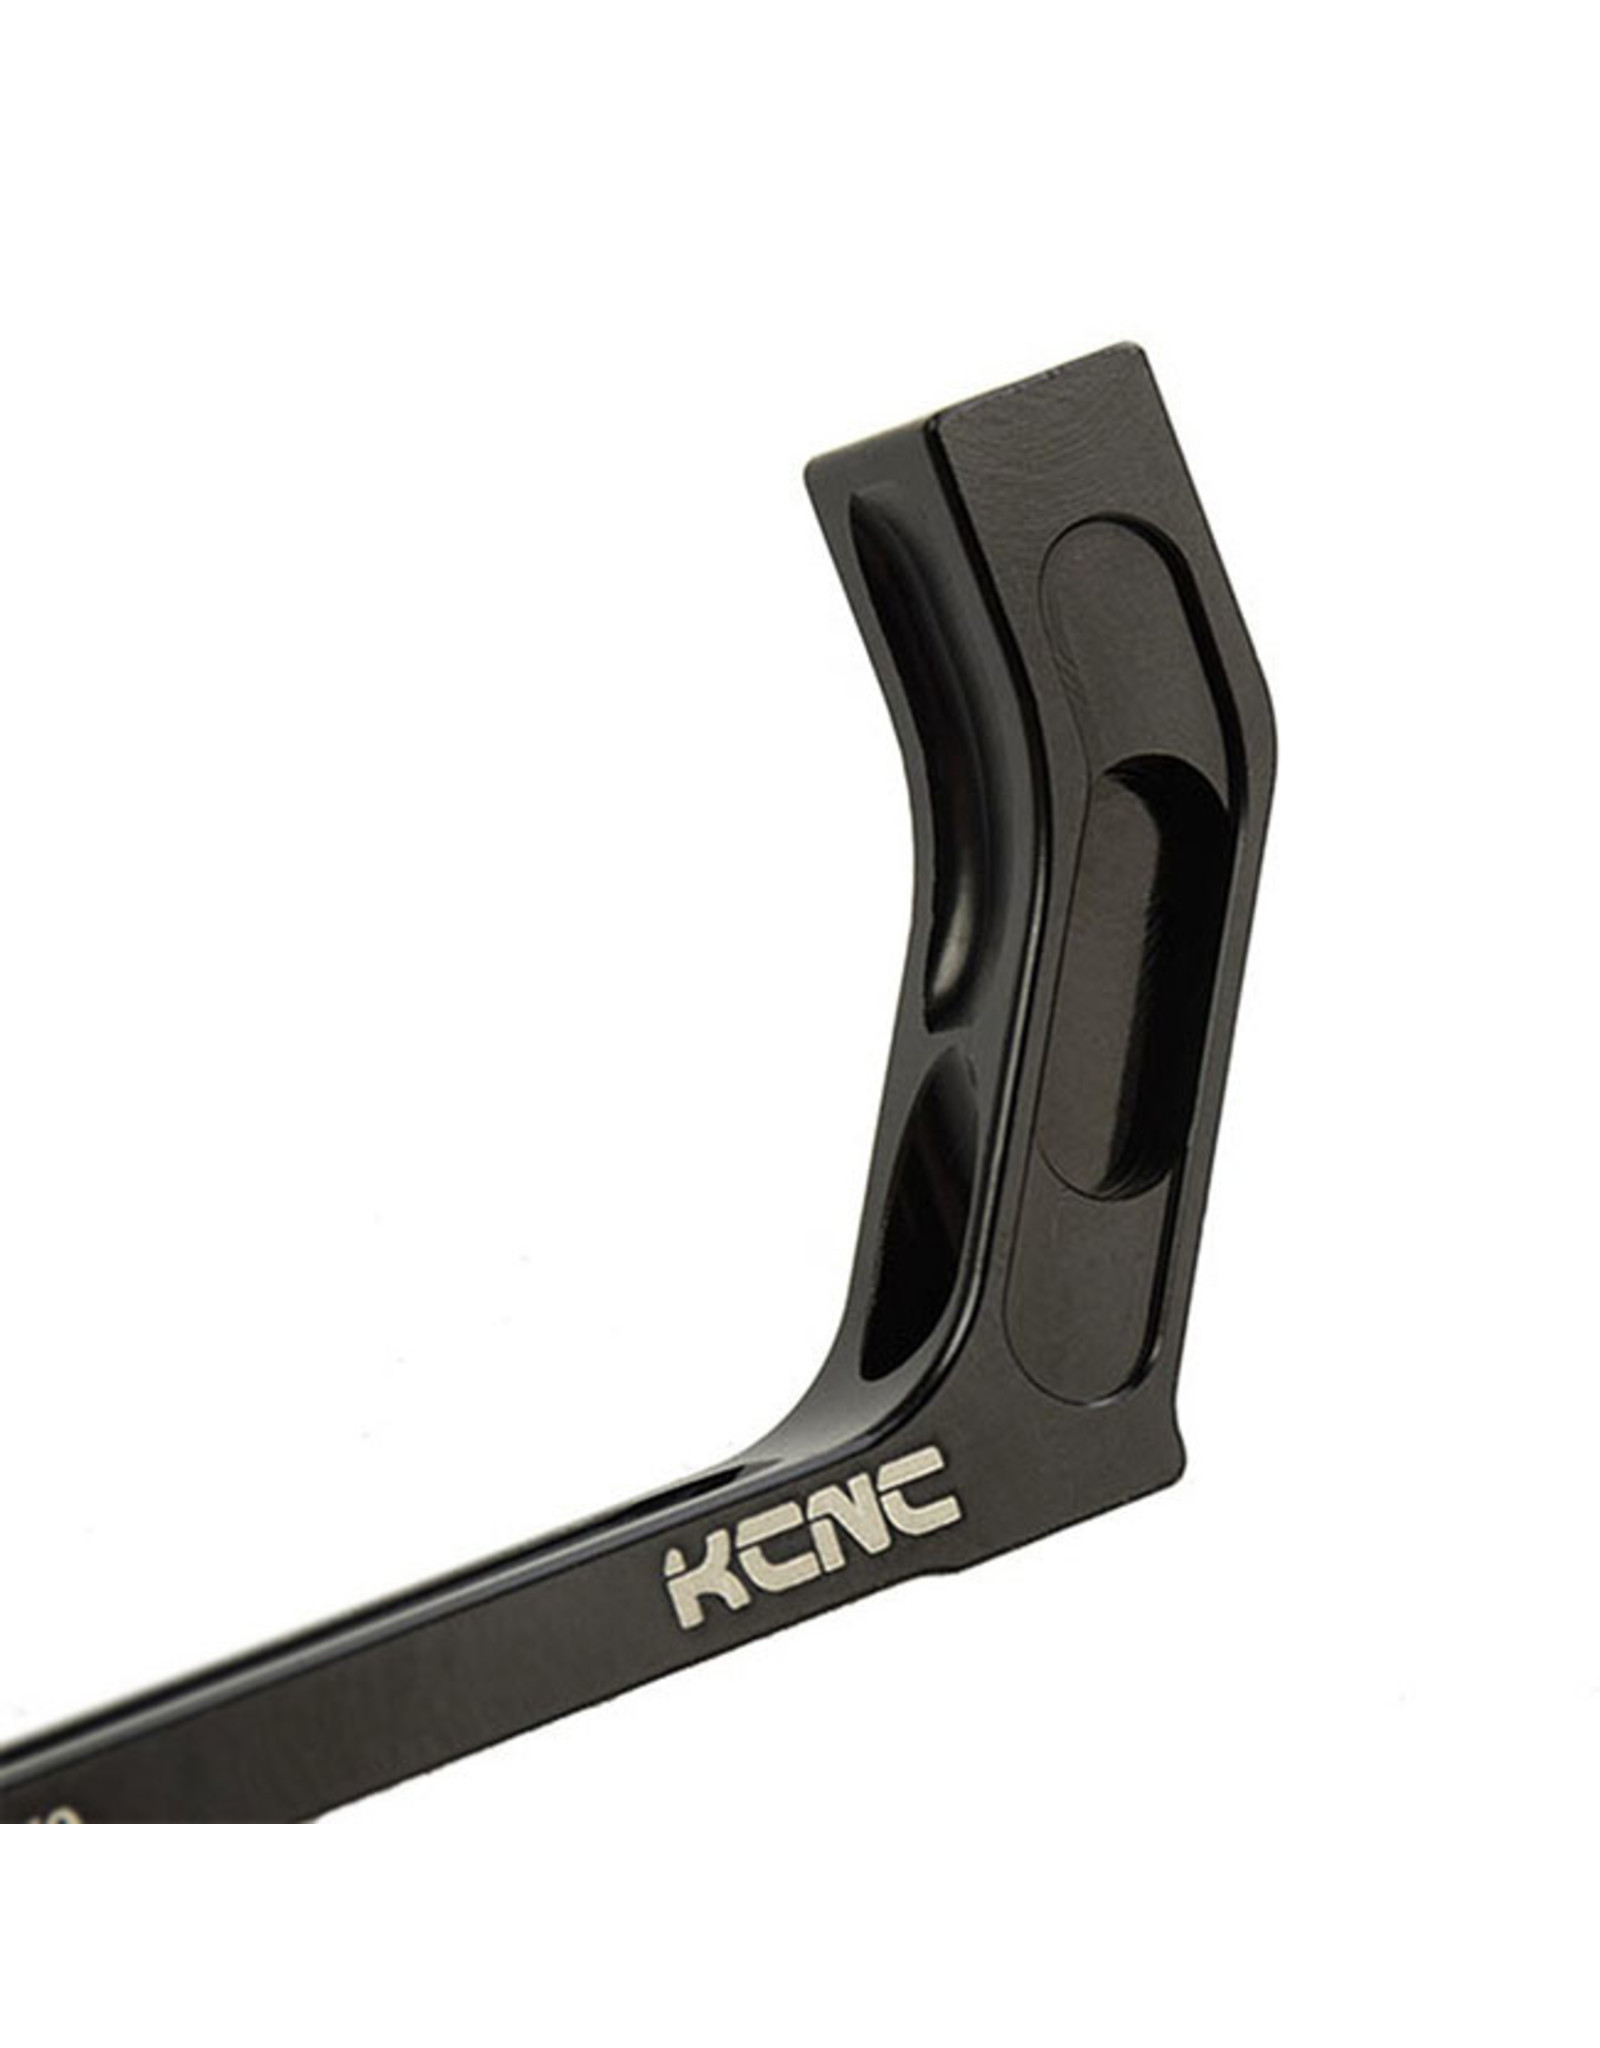 KCNC KCNC Flat/Post Disc Brake Adapter